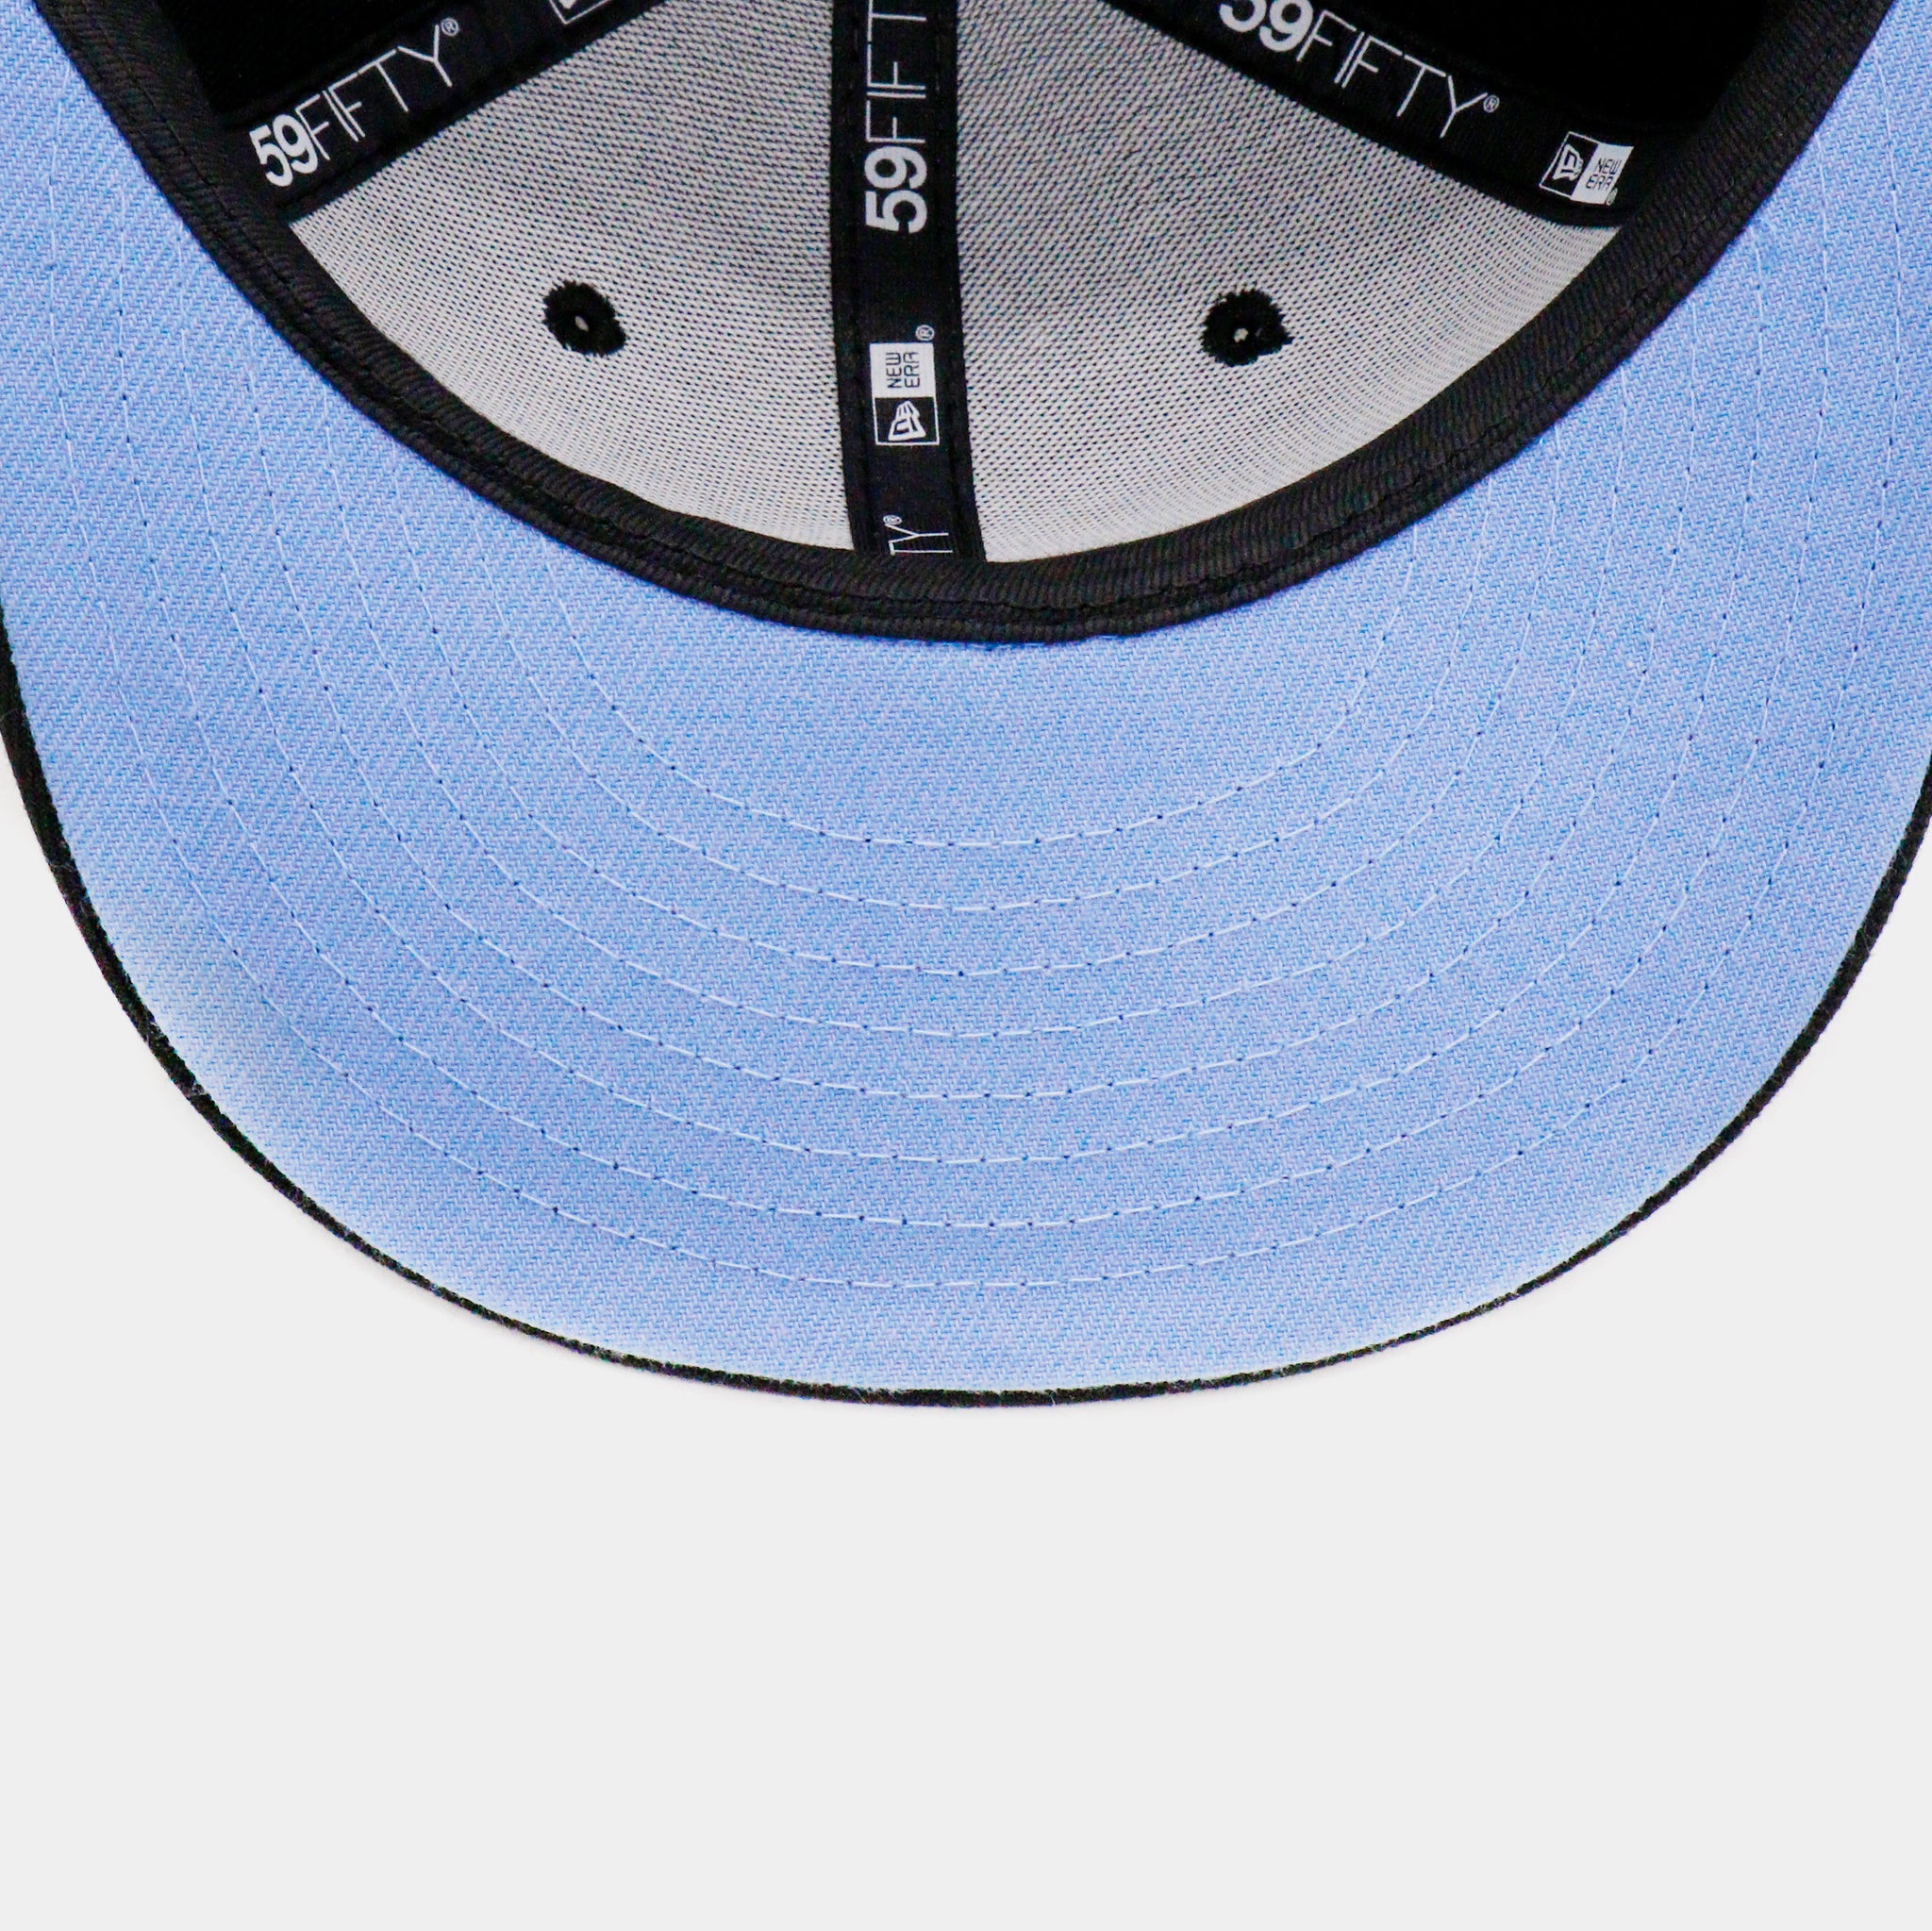 Men's Chicago Bulls New Era Black/Light Blue 2-Tone 59FIFTY Fitted Hat